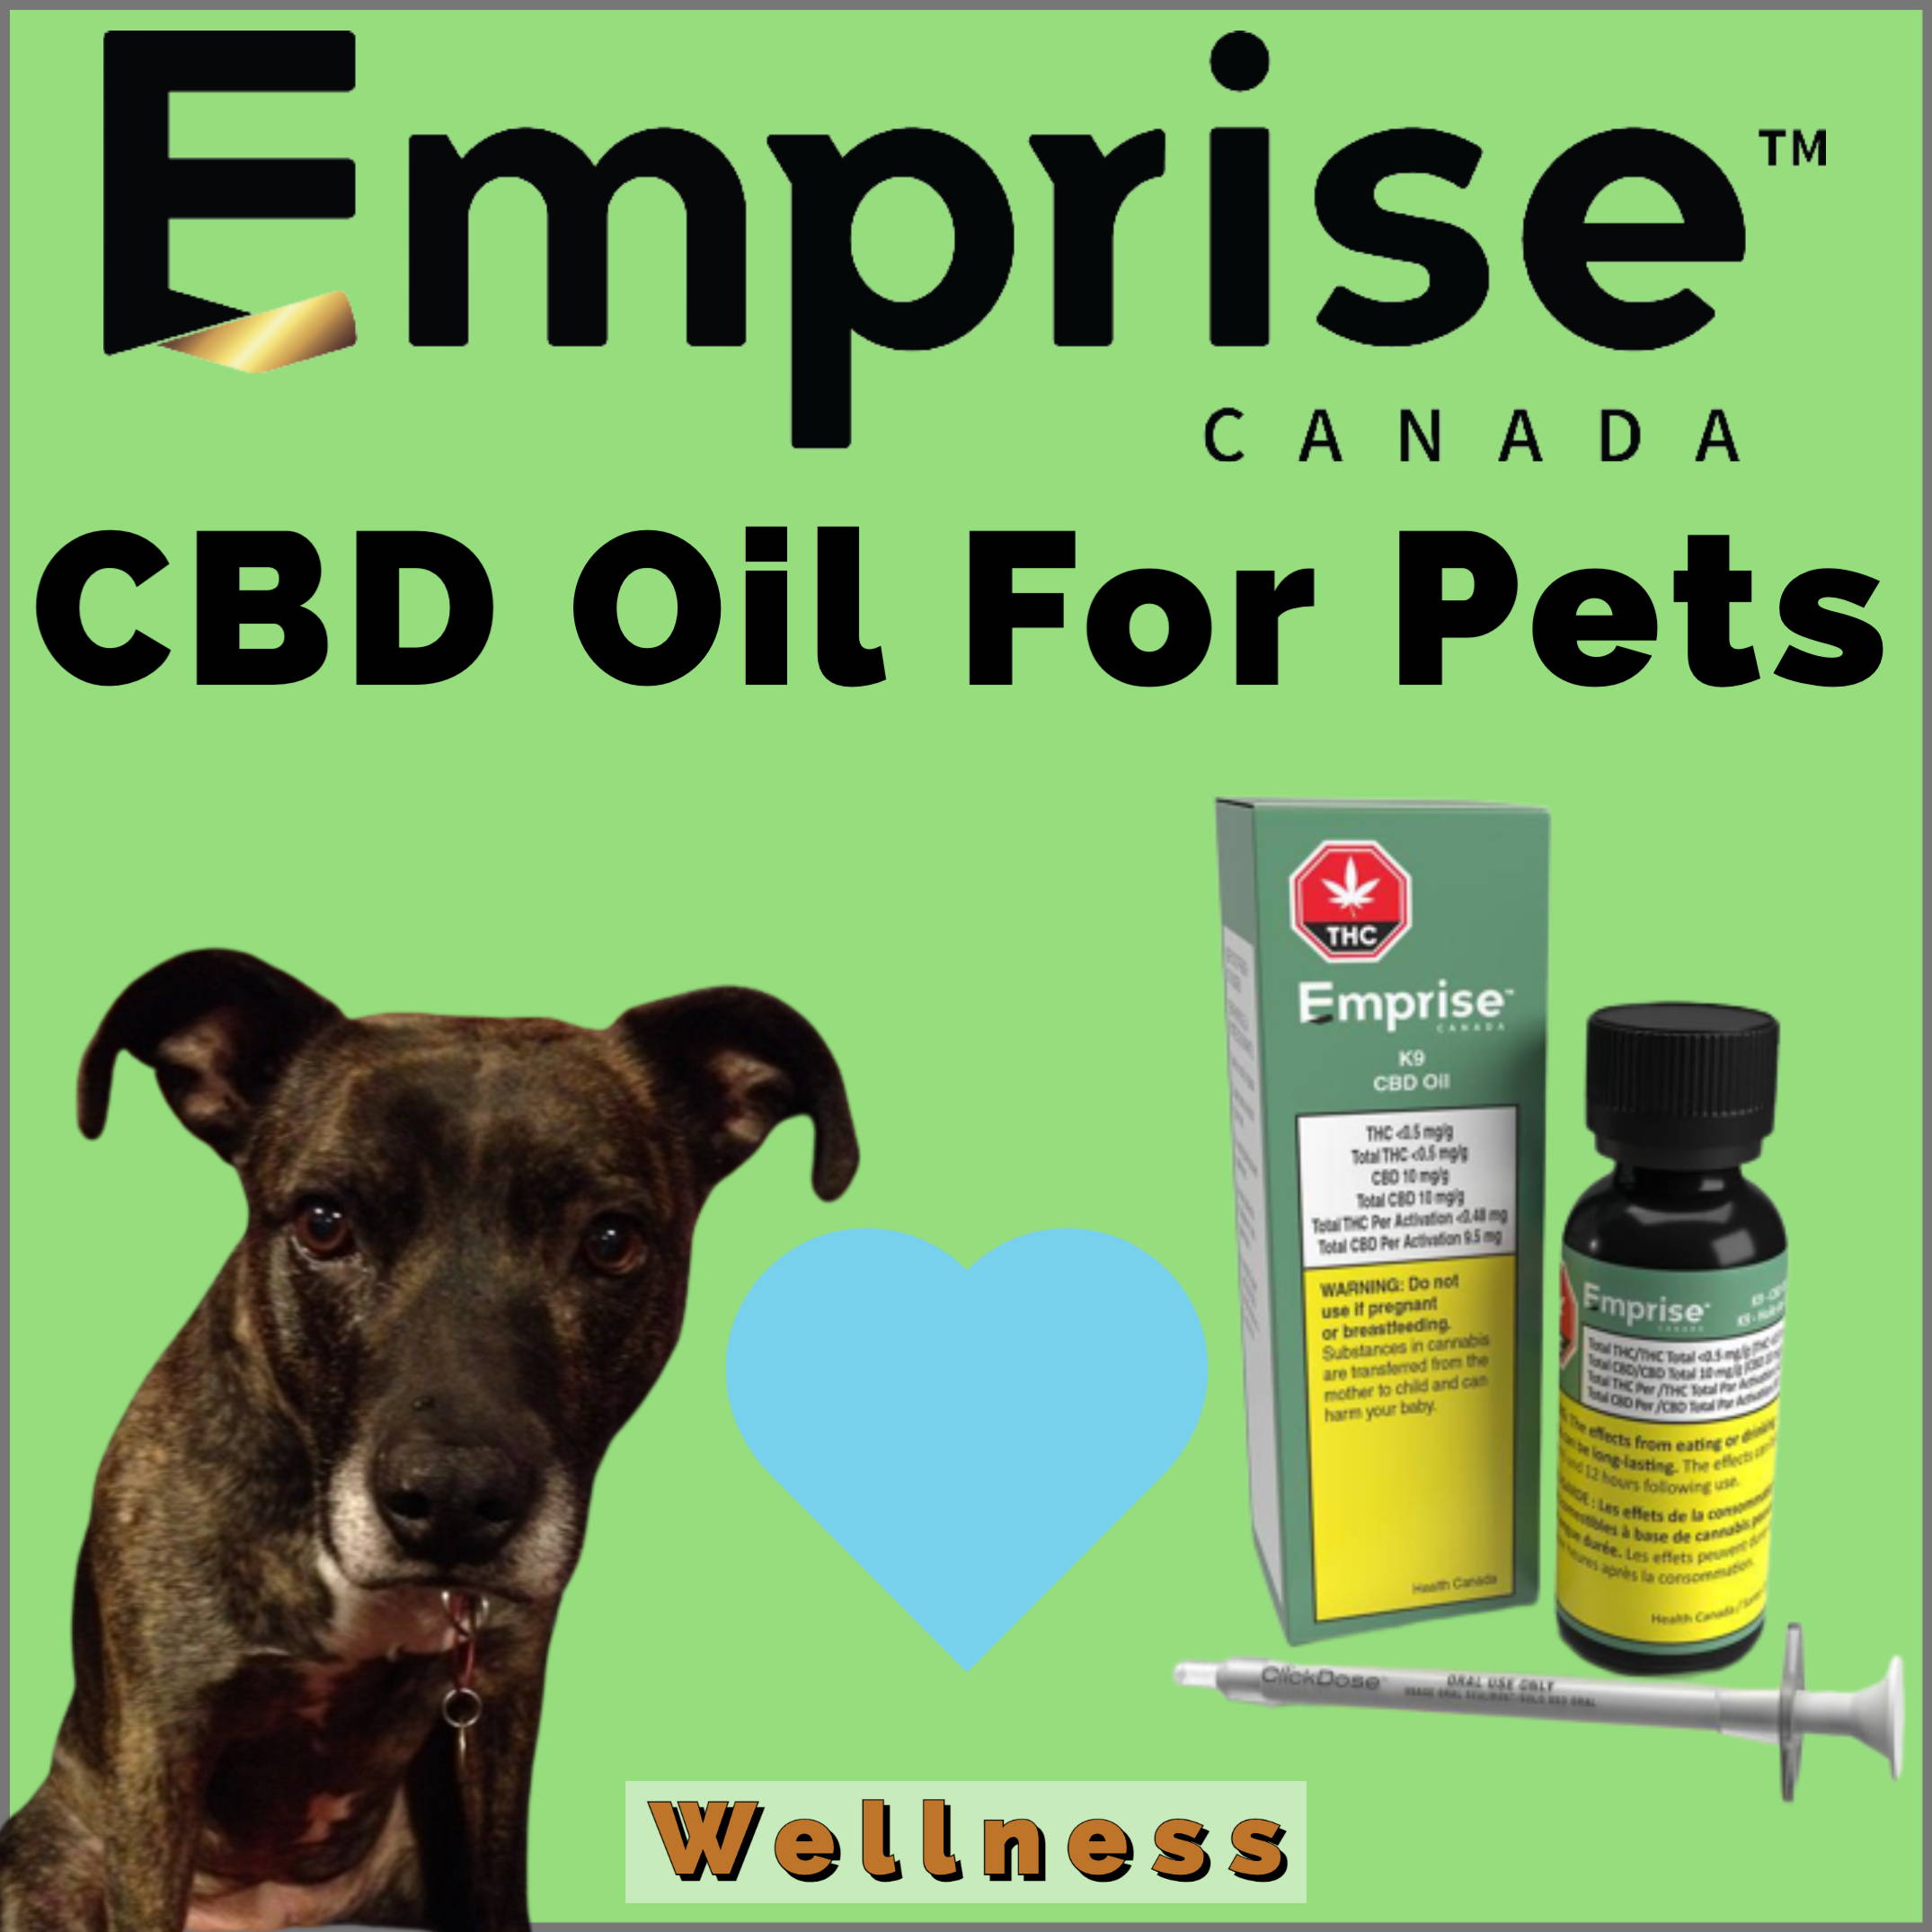 K9 Emprise CBD Oil For Pets | Jupiter Cannabis Winnipeg